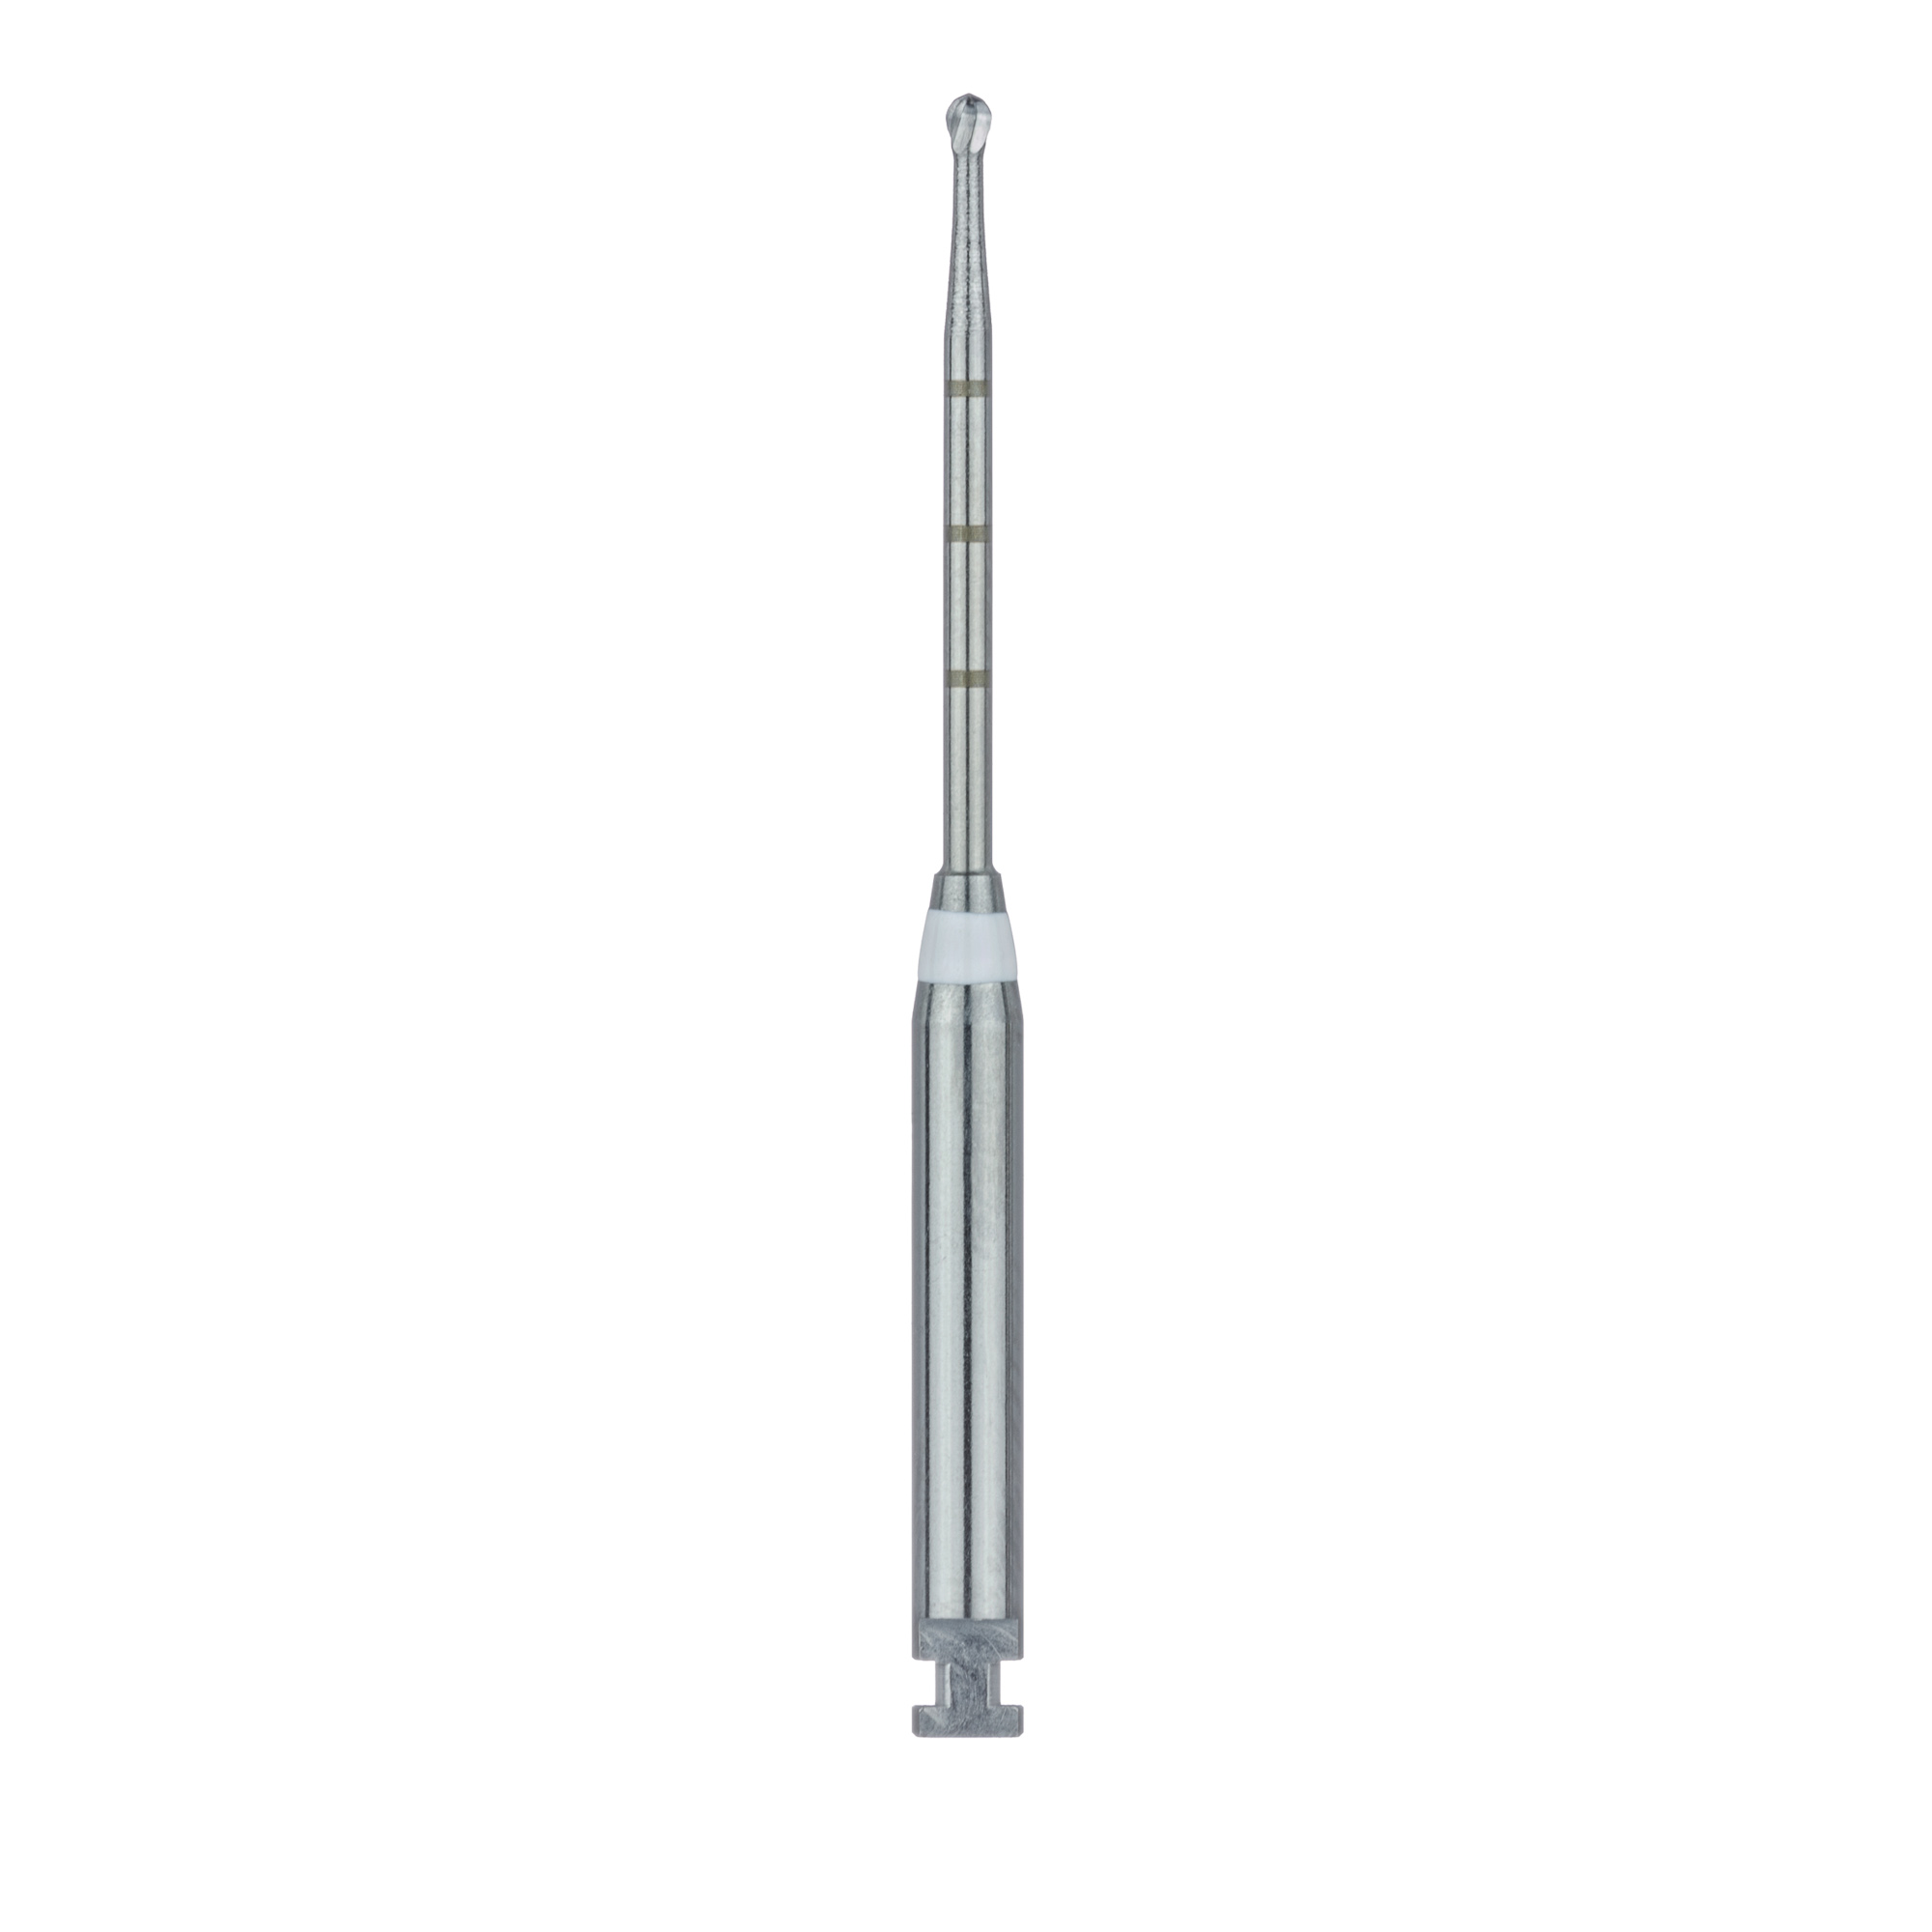 HM191A-010-RAXL Endo, Long Neck Endo Access Bur, Carbide Cutting Tip, Round, 34mm, 1.0mm, RA